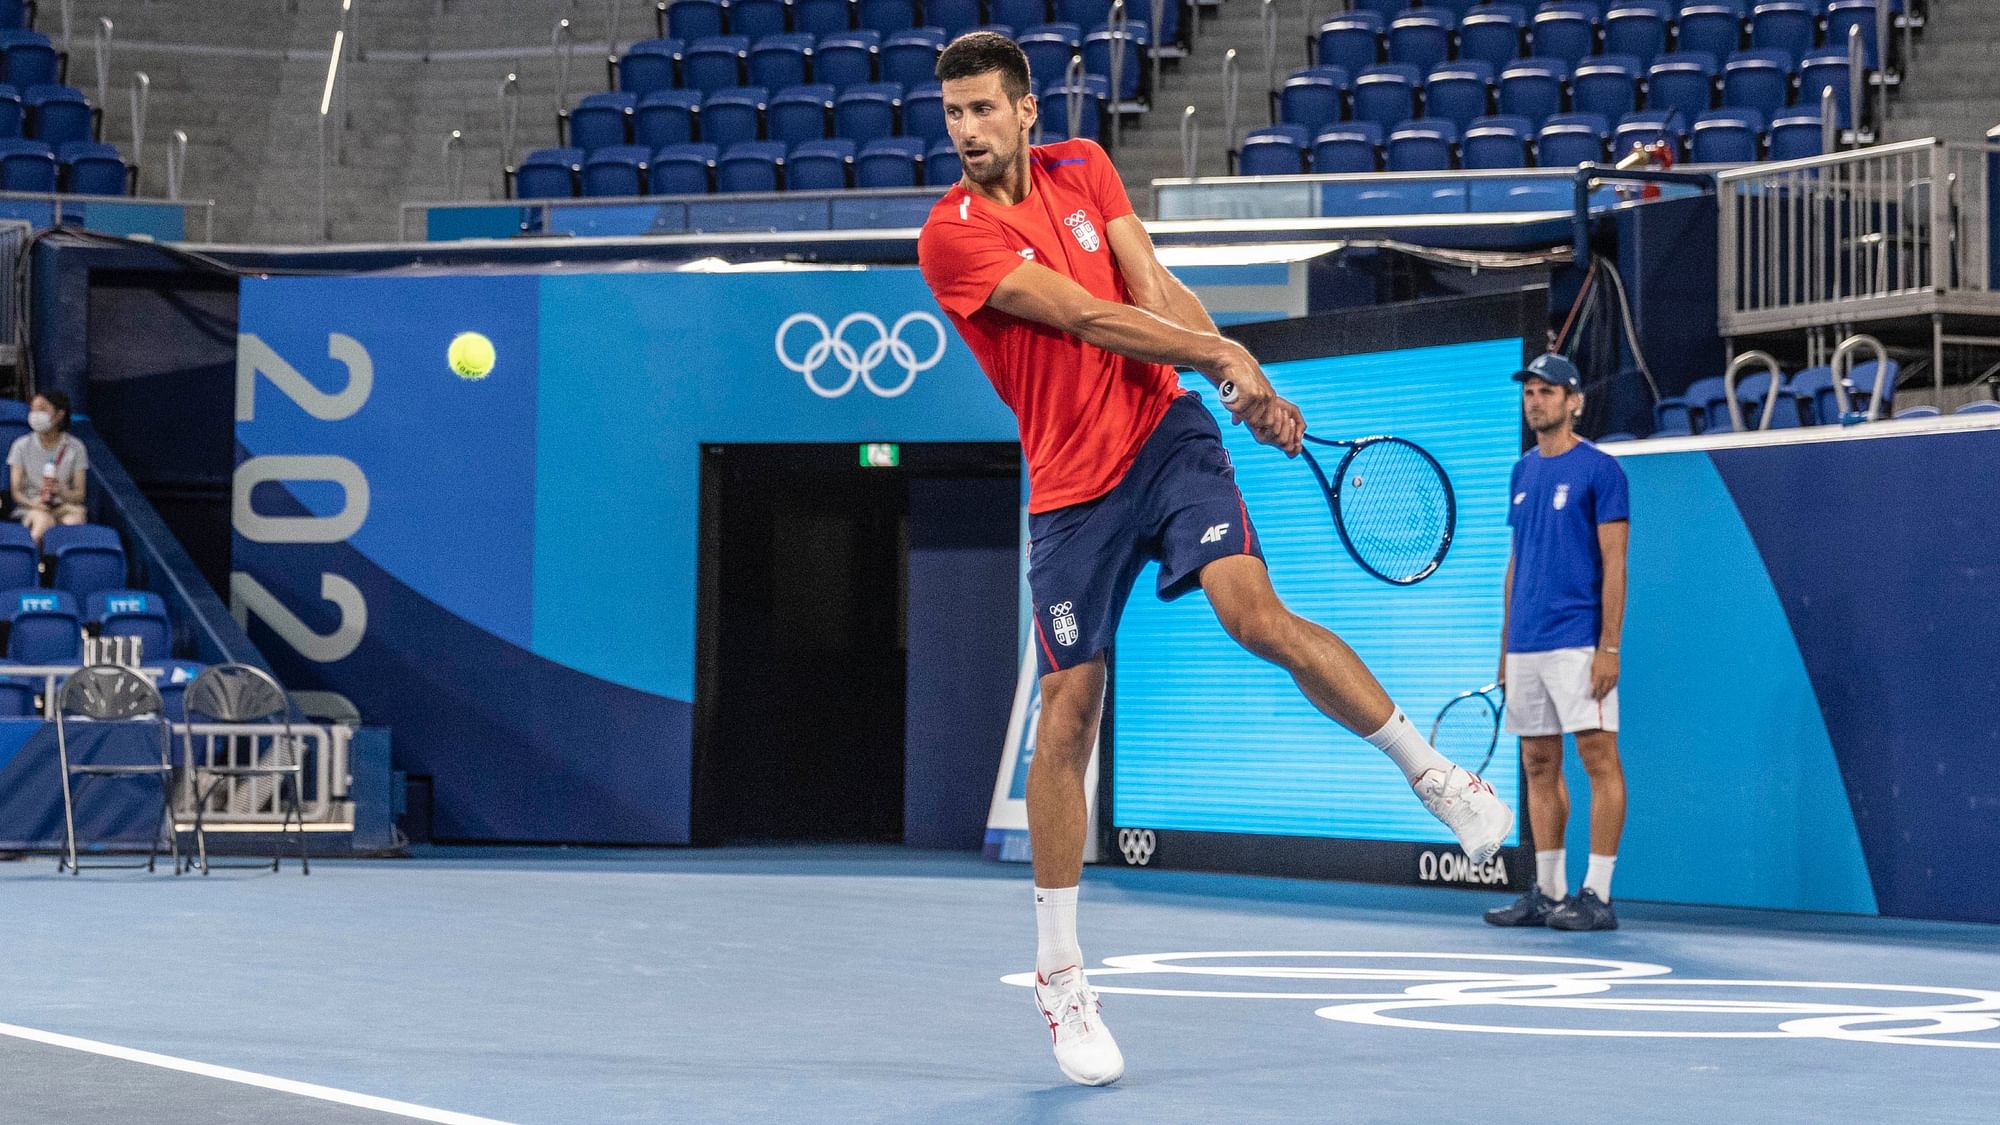 <div class="paragraphs"><p>Tokyo Olympics: Novak Djokovic during a training session in Tokyo.</p></div>